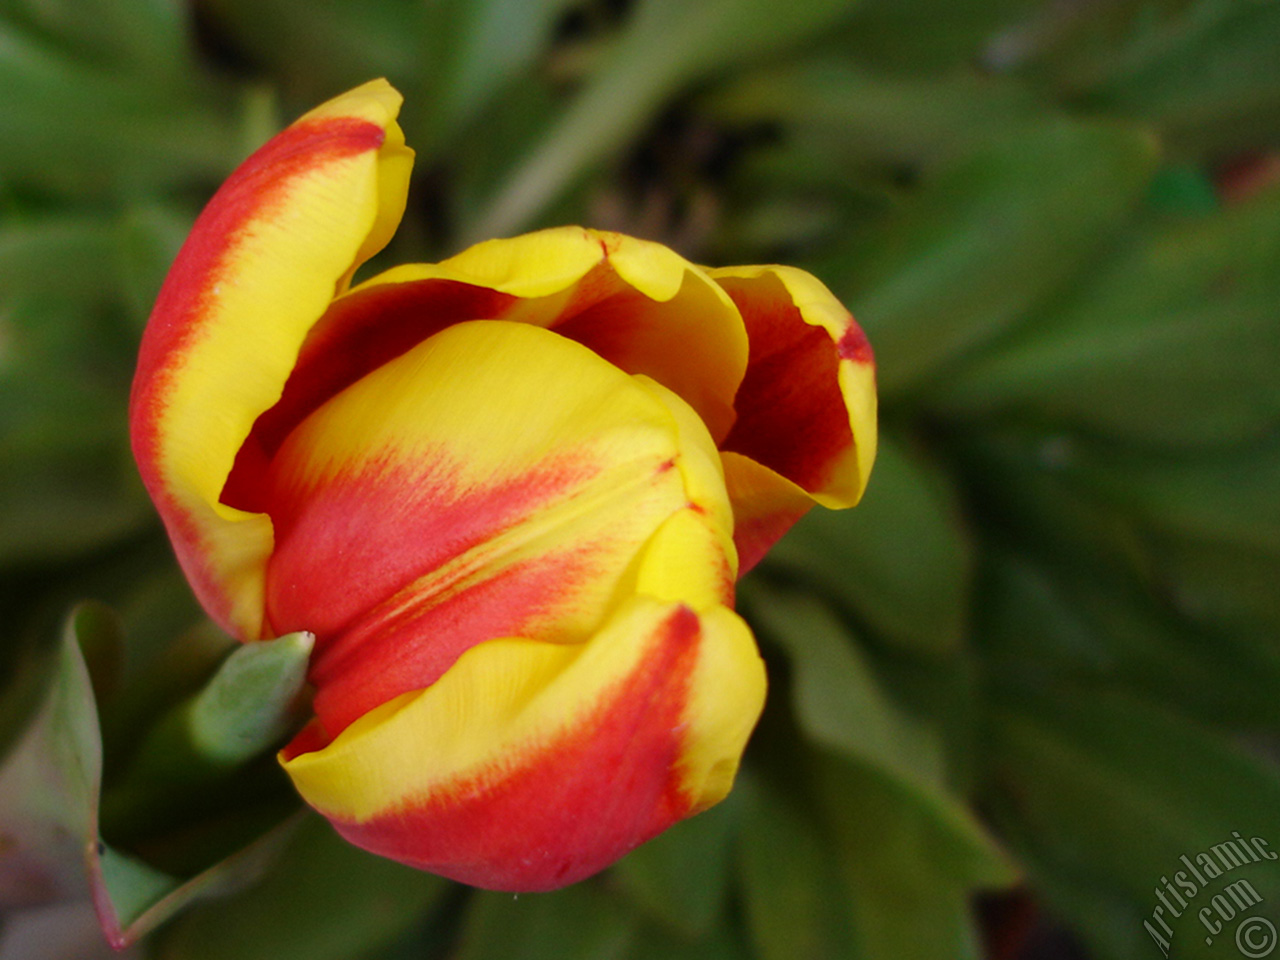 Red-yellow color Turkish-Ottoman Tulip photo.
